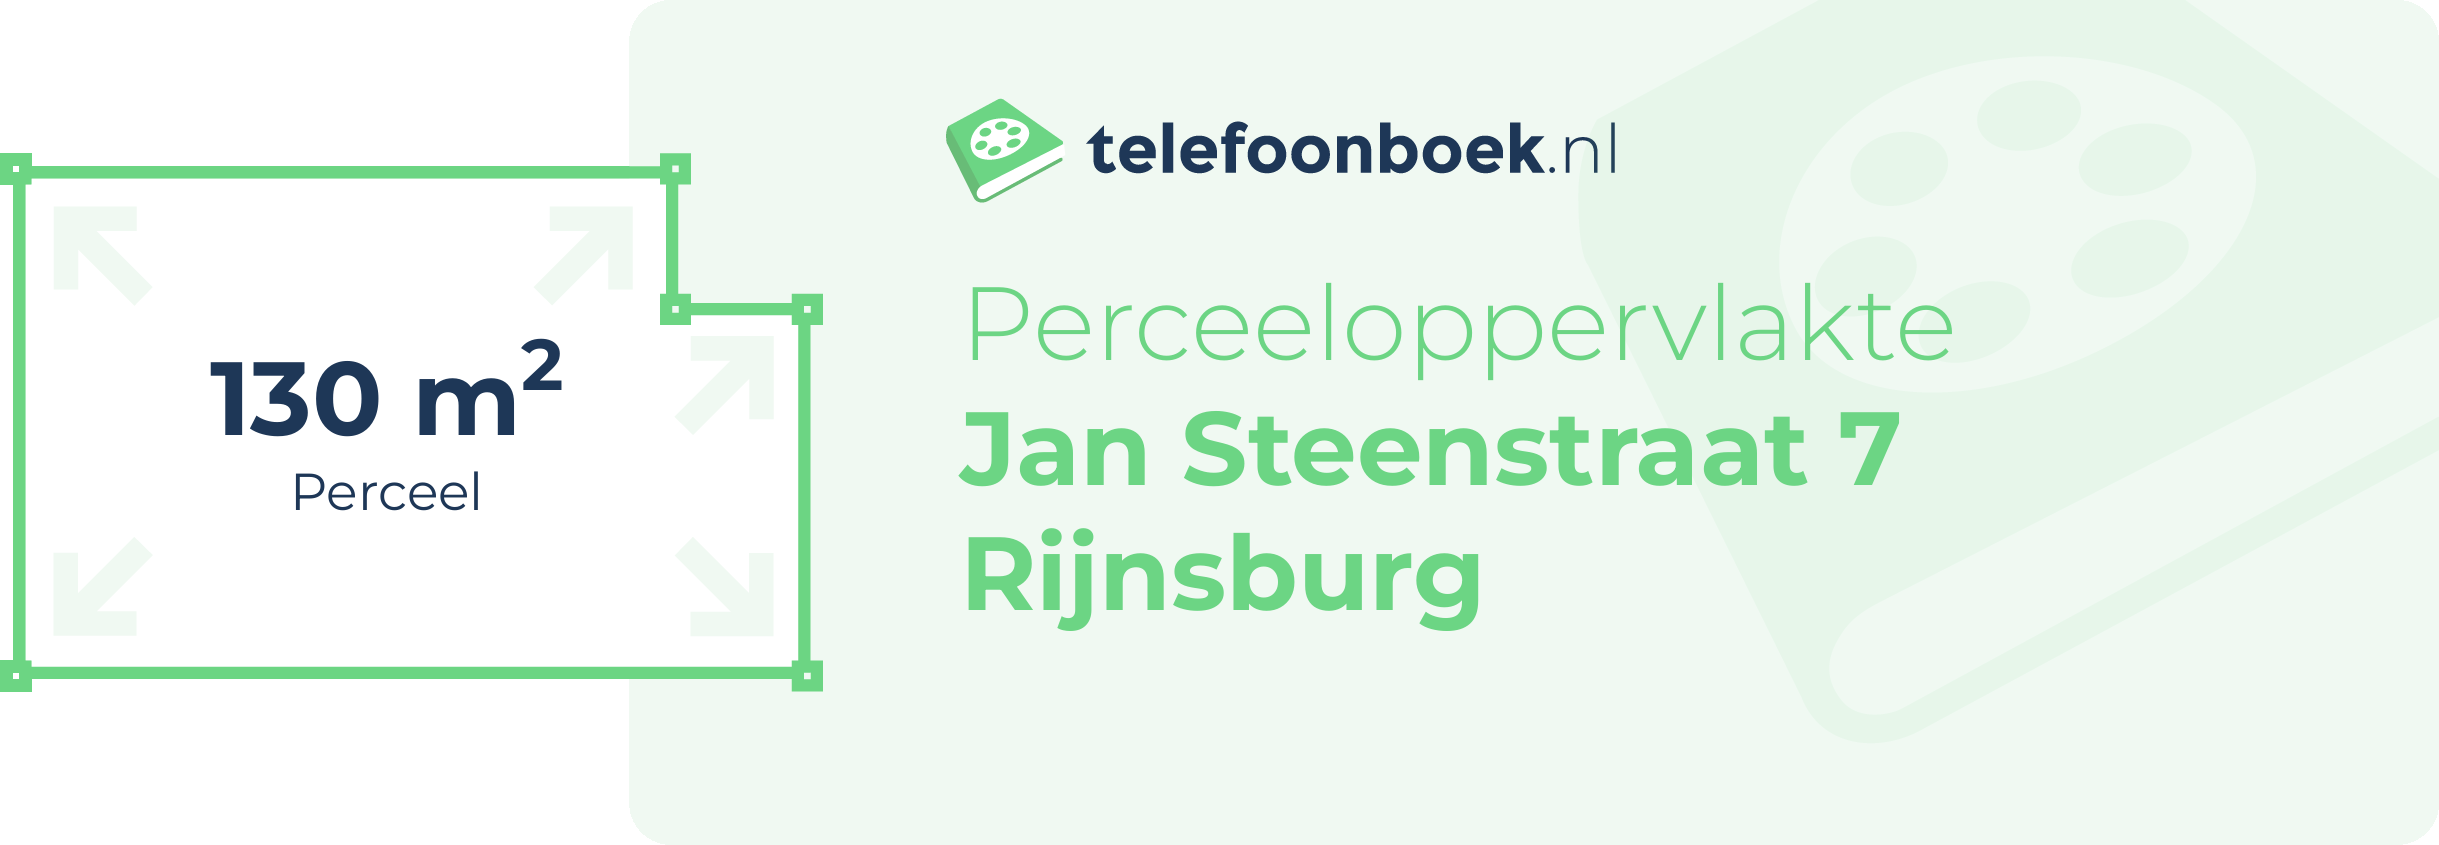 Perceeloppervlakte Jan Steenstraat 7 Rijnsburg